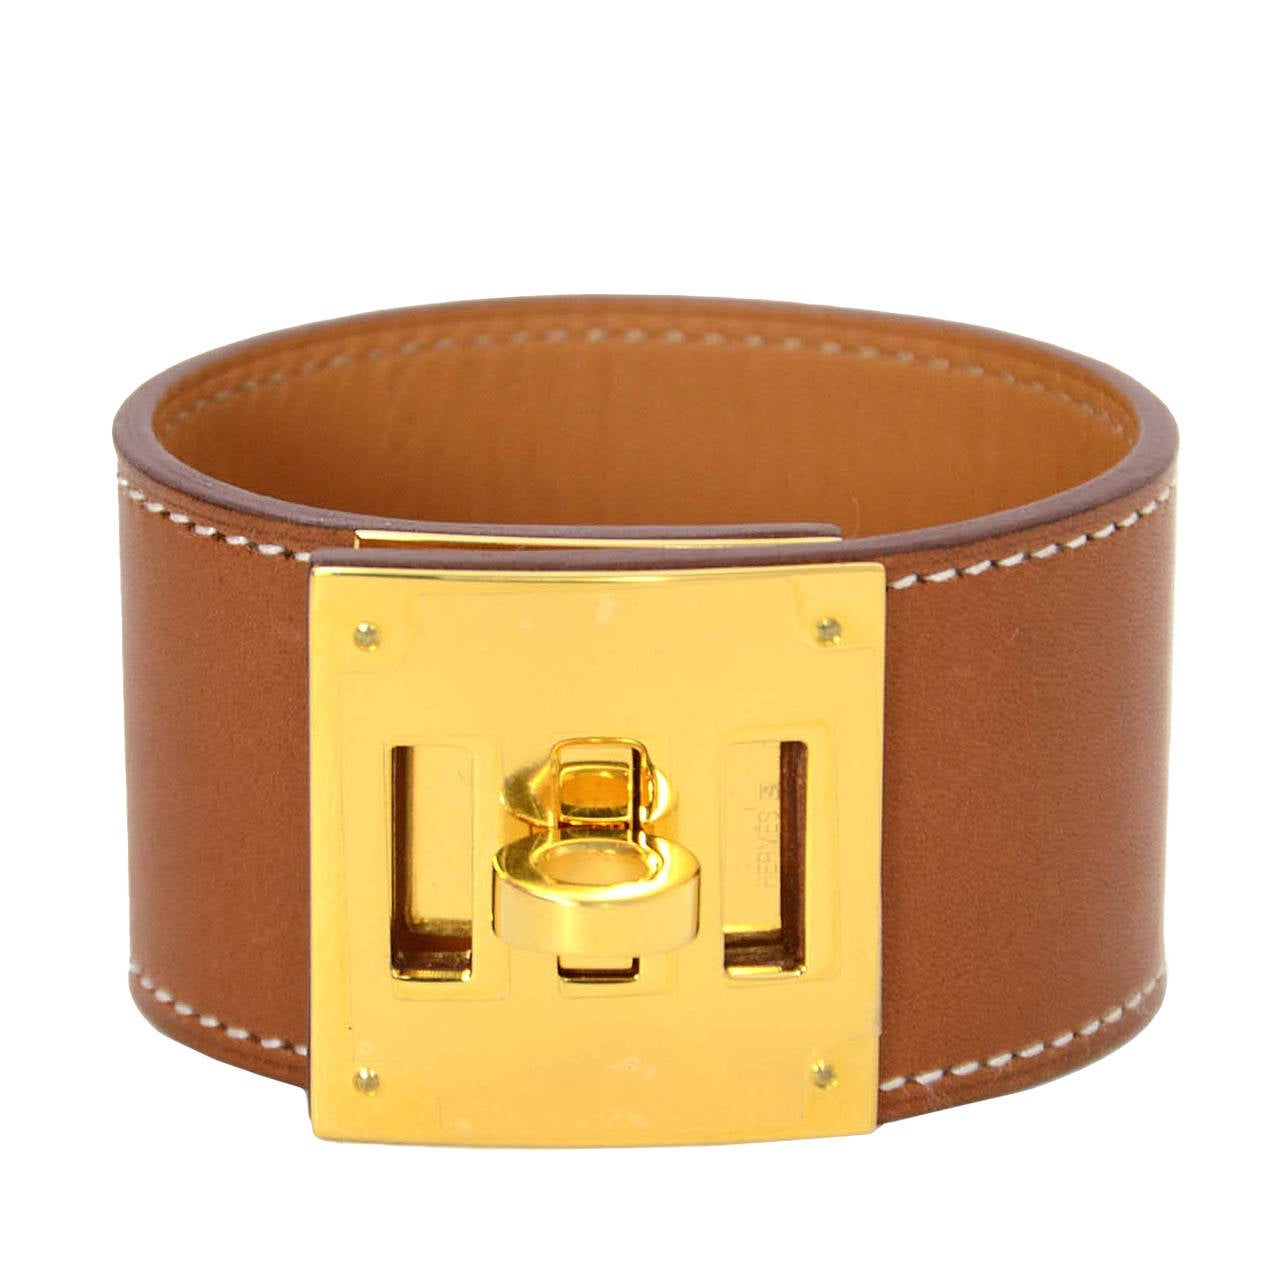 HERMES 2013 Fauve Barenia Leather Kelly Dog Bracelet rt $600